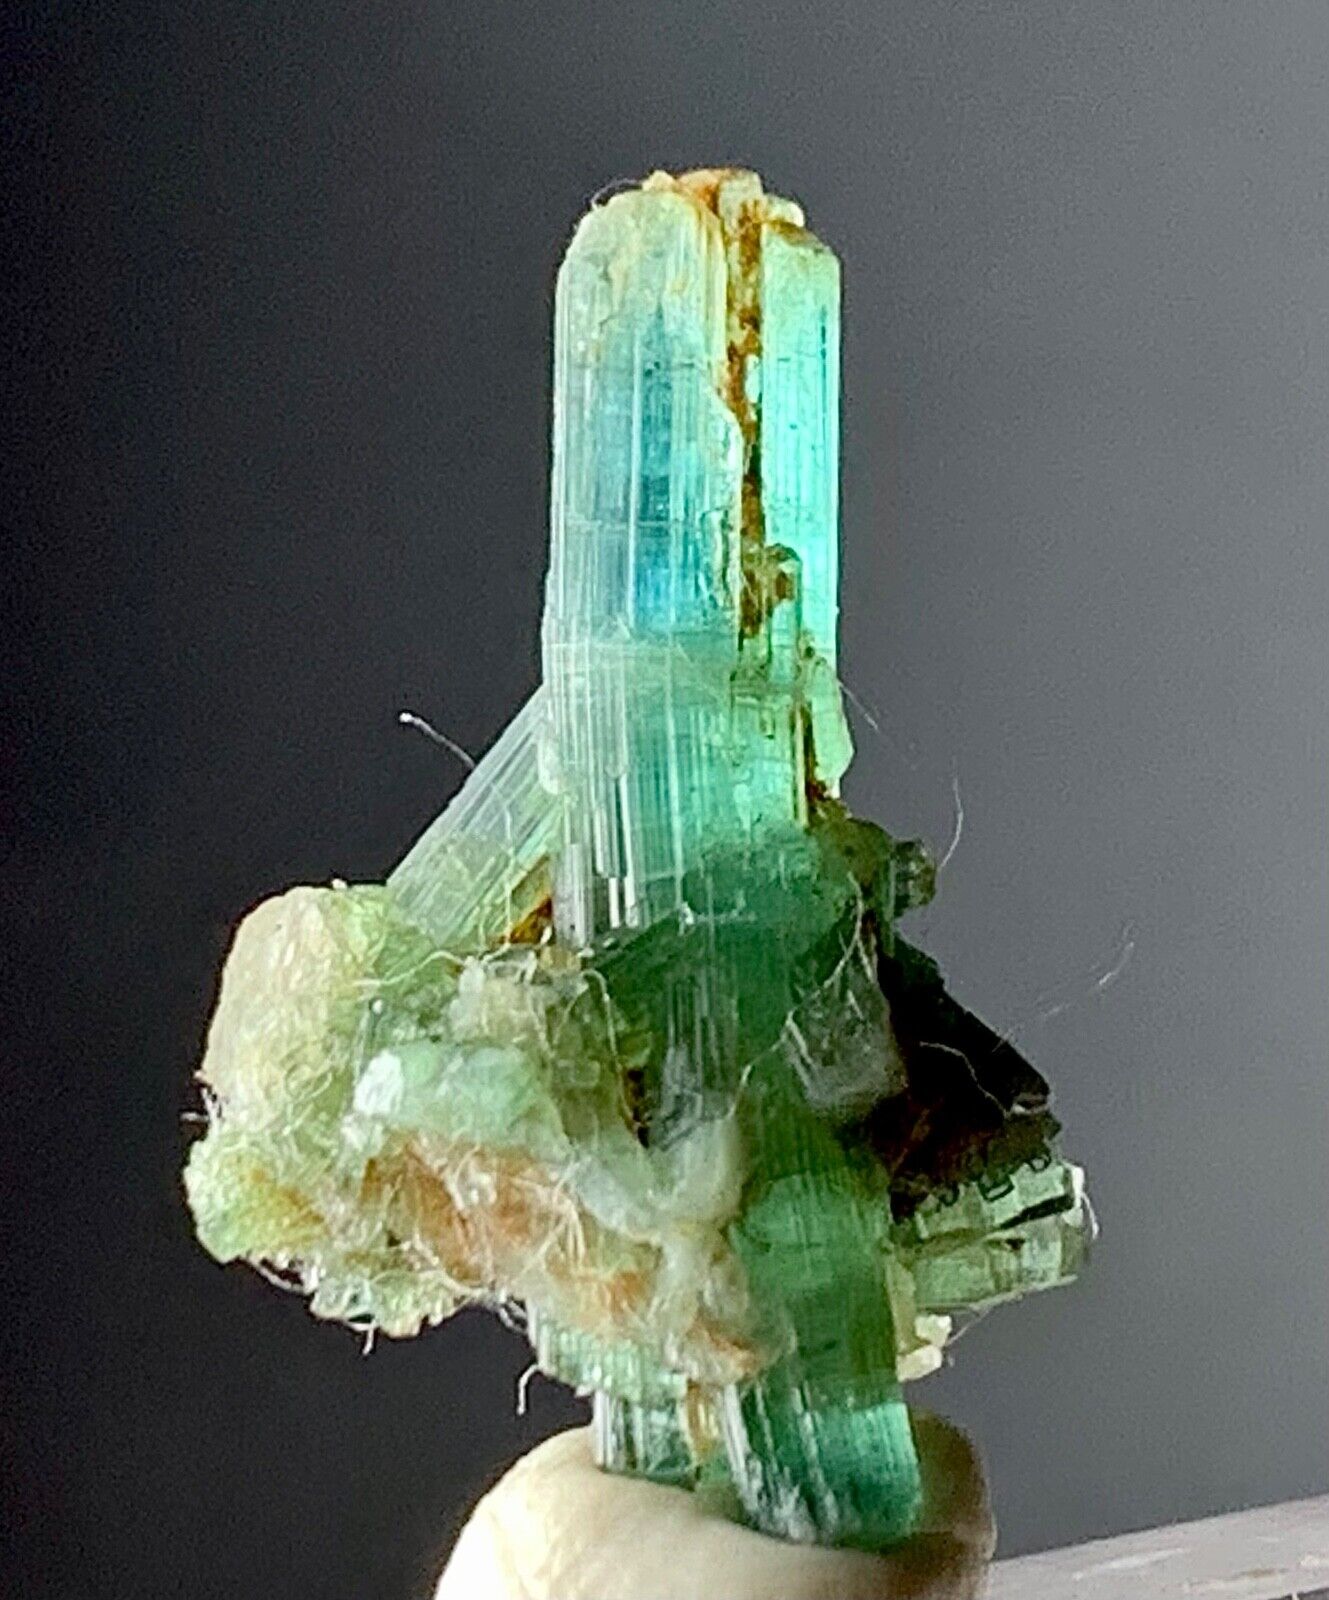 11 Carat Tourmaline Crystal Specimen From Afghanistan